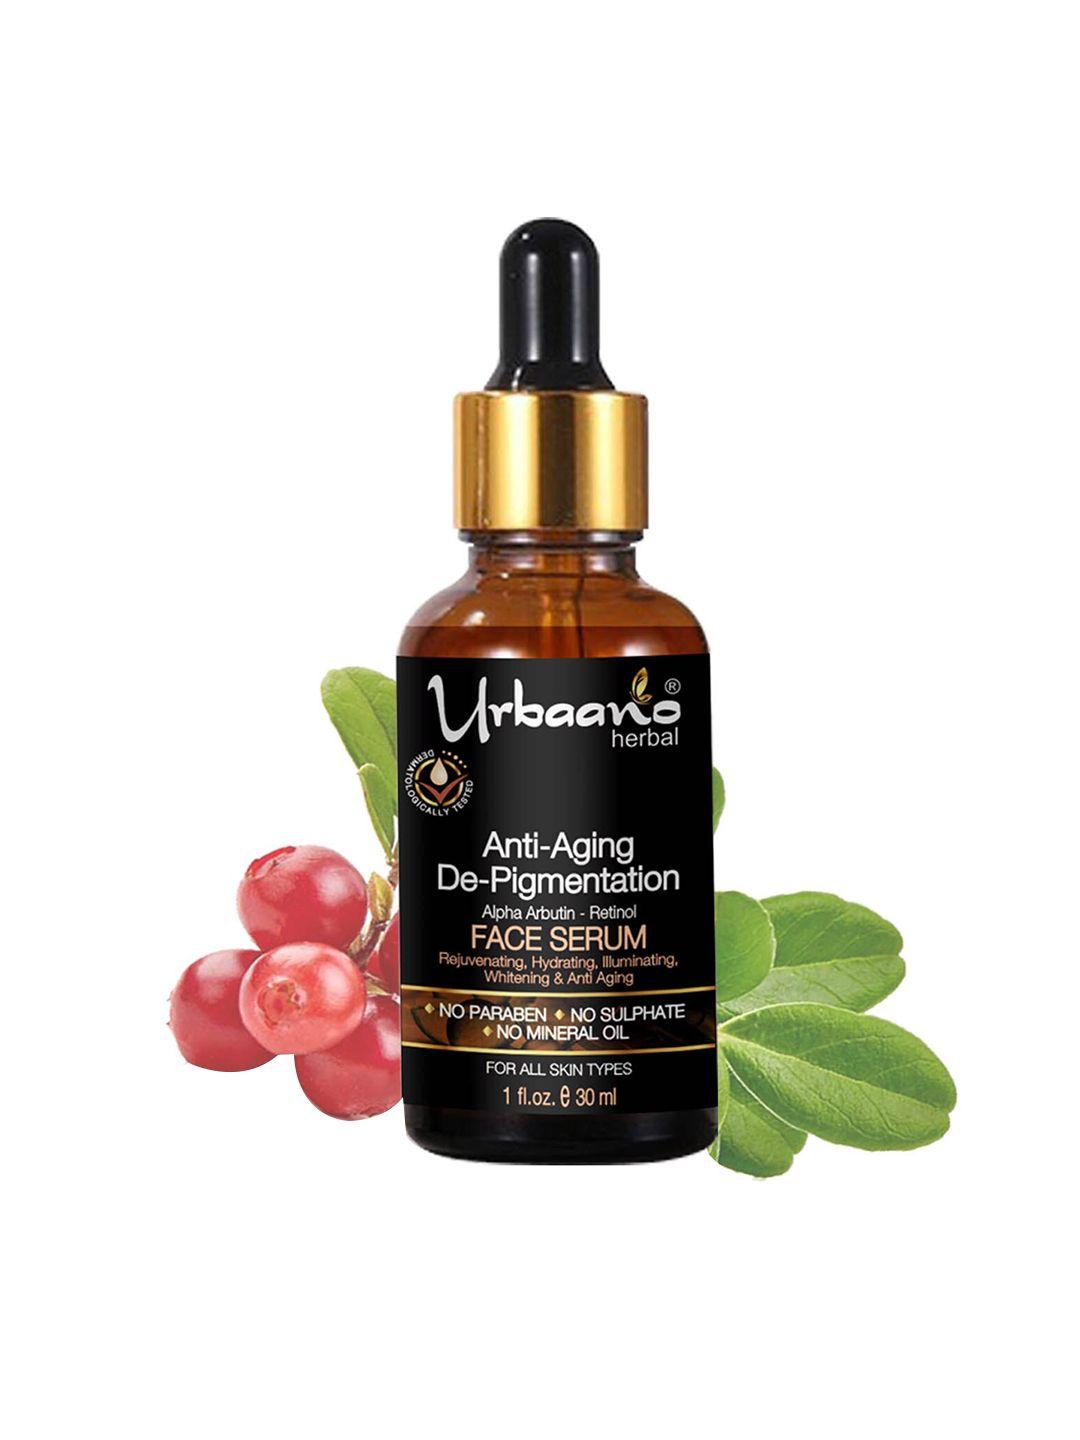 urbaano herbal anti-aging & de-pigmentation retinol alpha arbutin face serum - 30ml